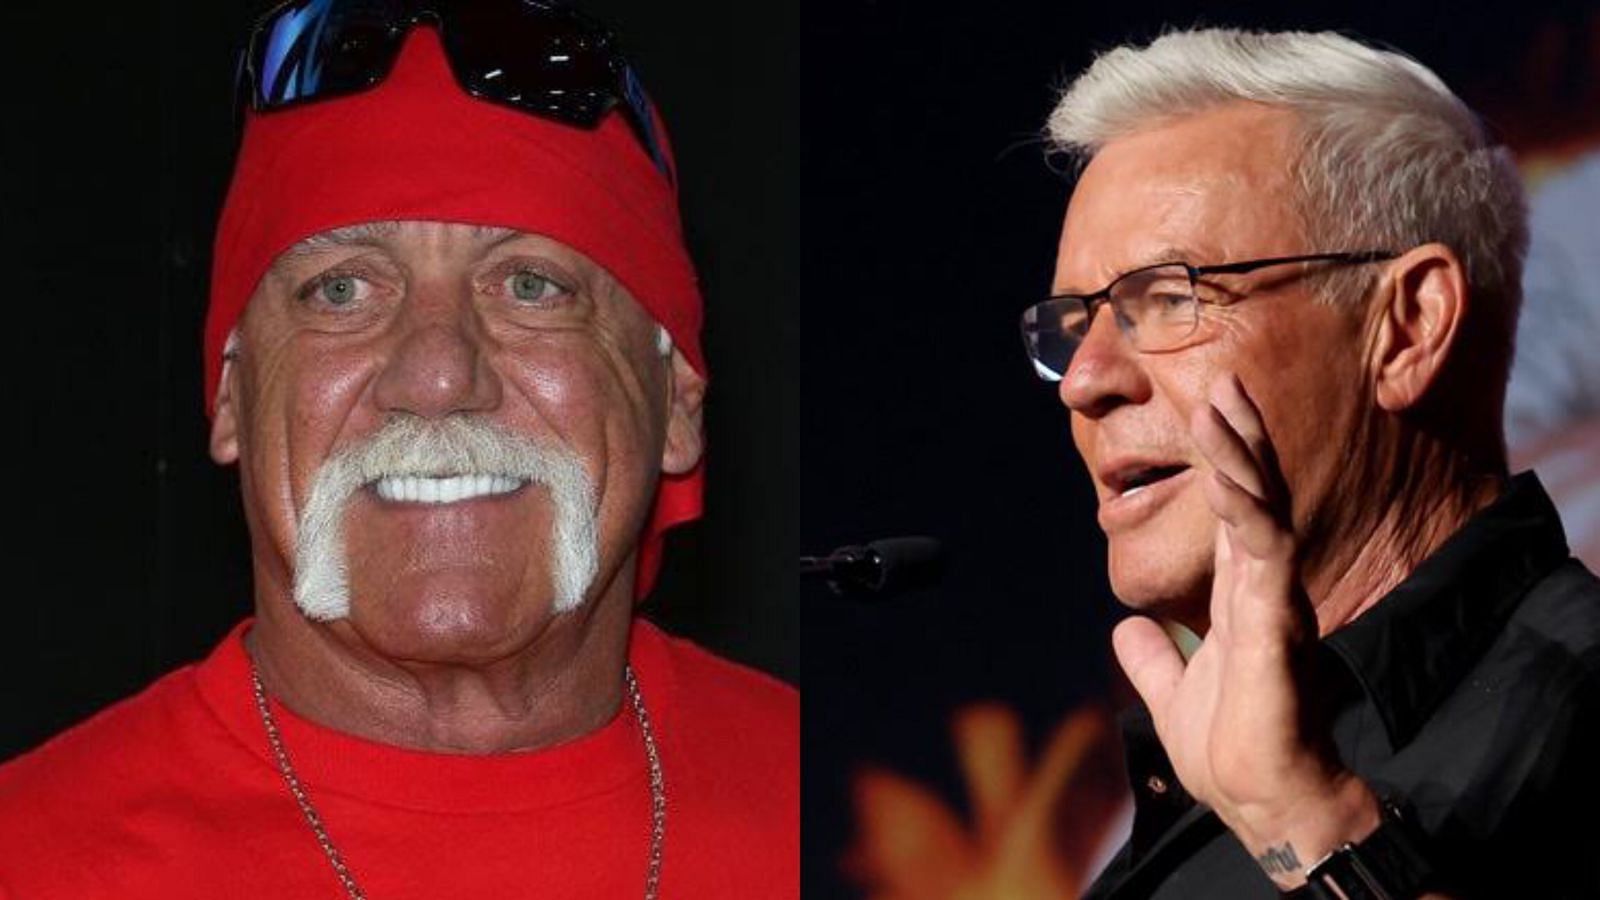 The Immortal Hulk Hogan &amp; Eric Bischoff 